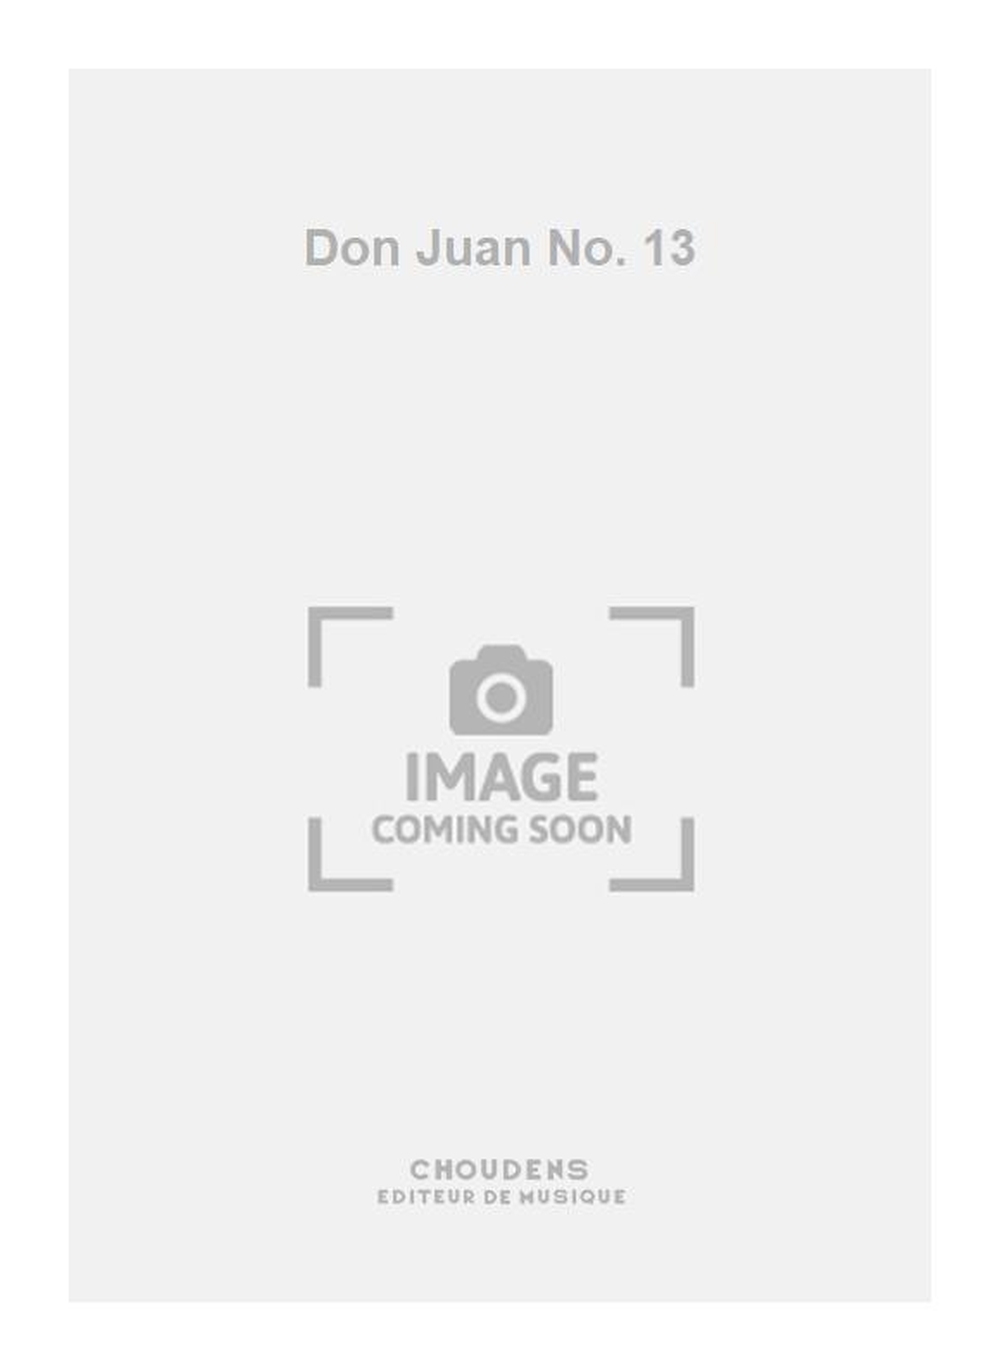 Don Juan No. 13